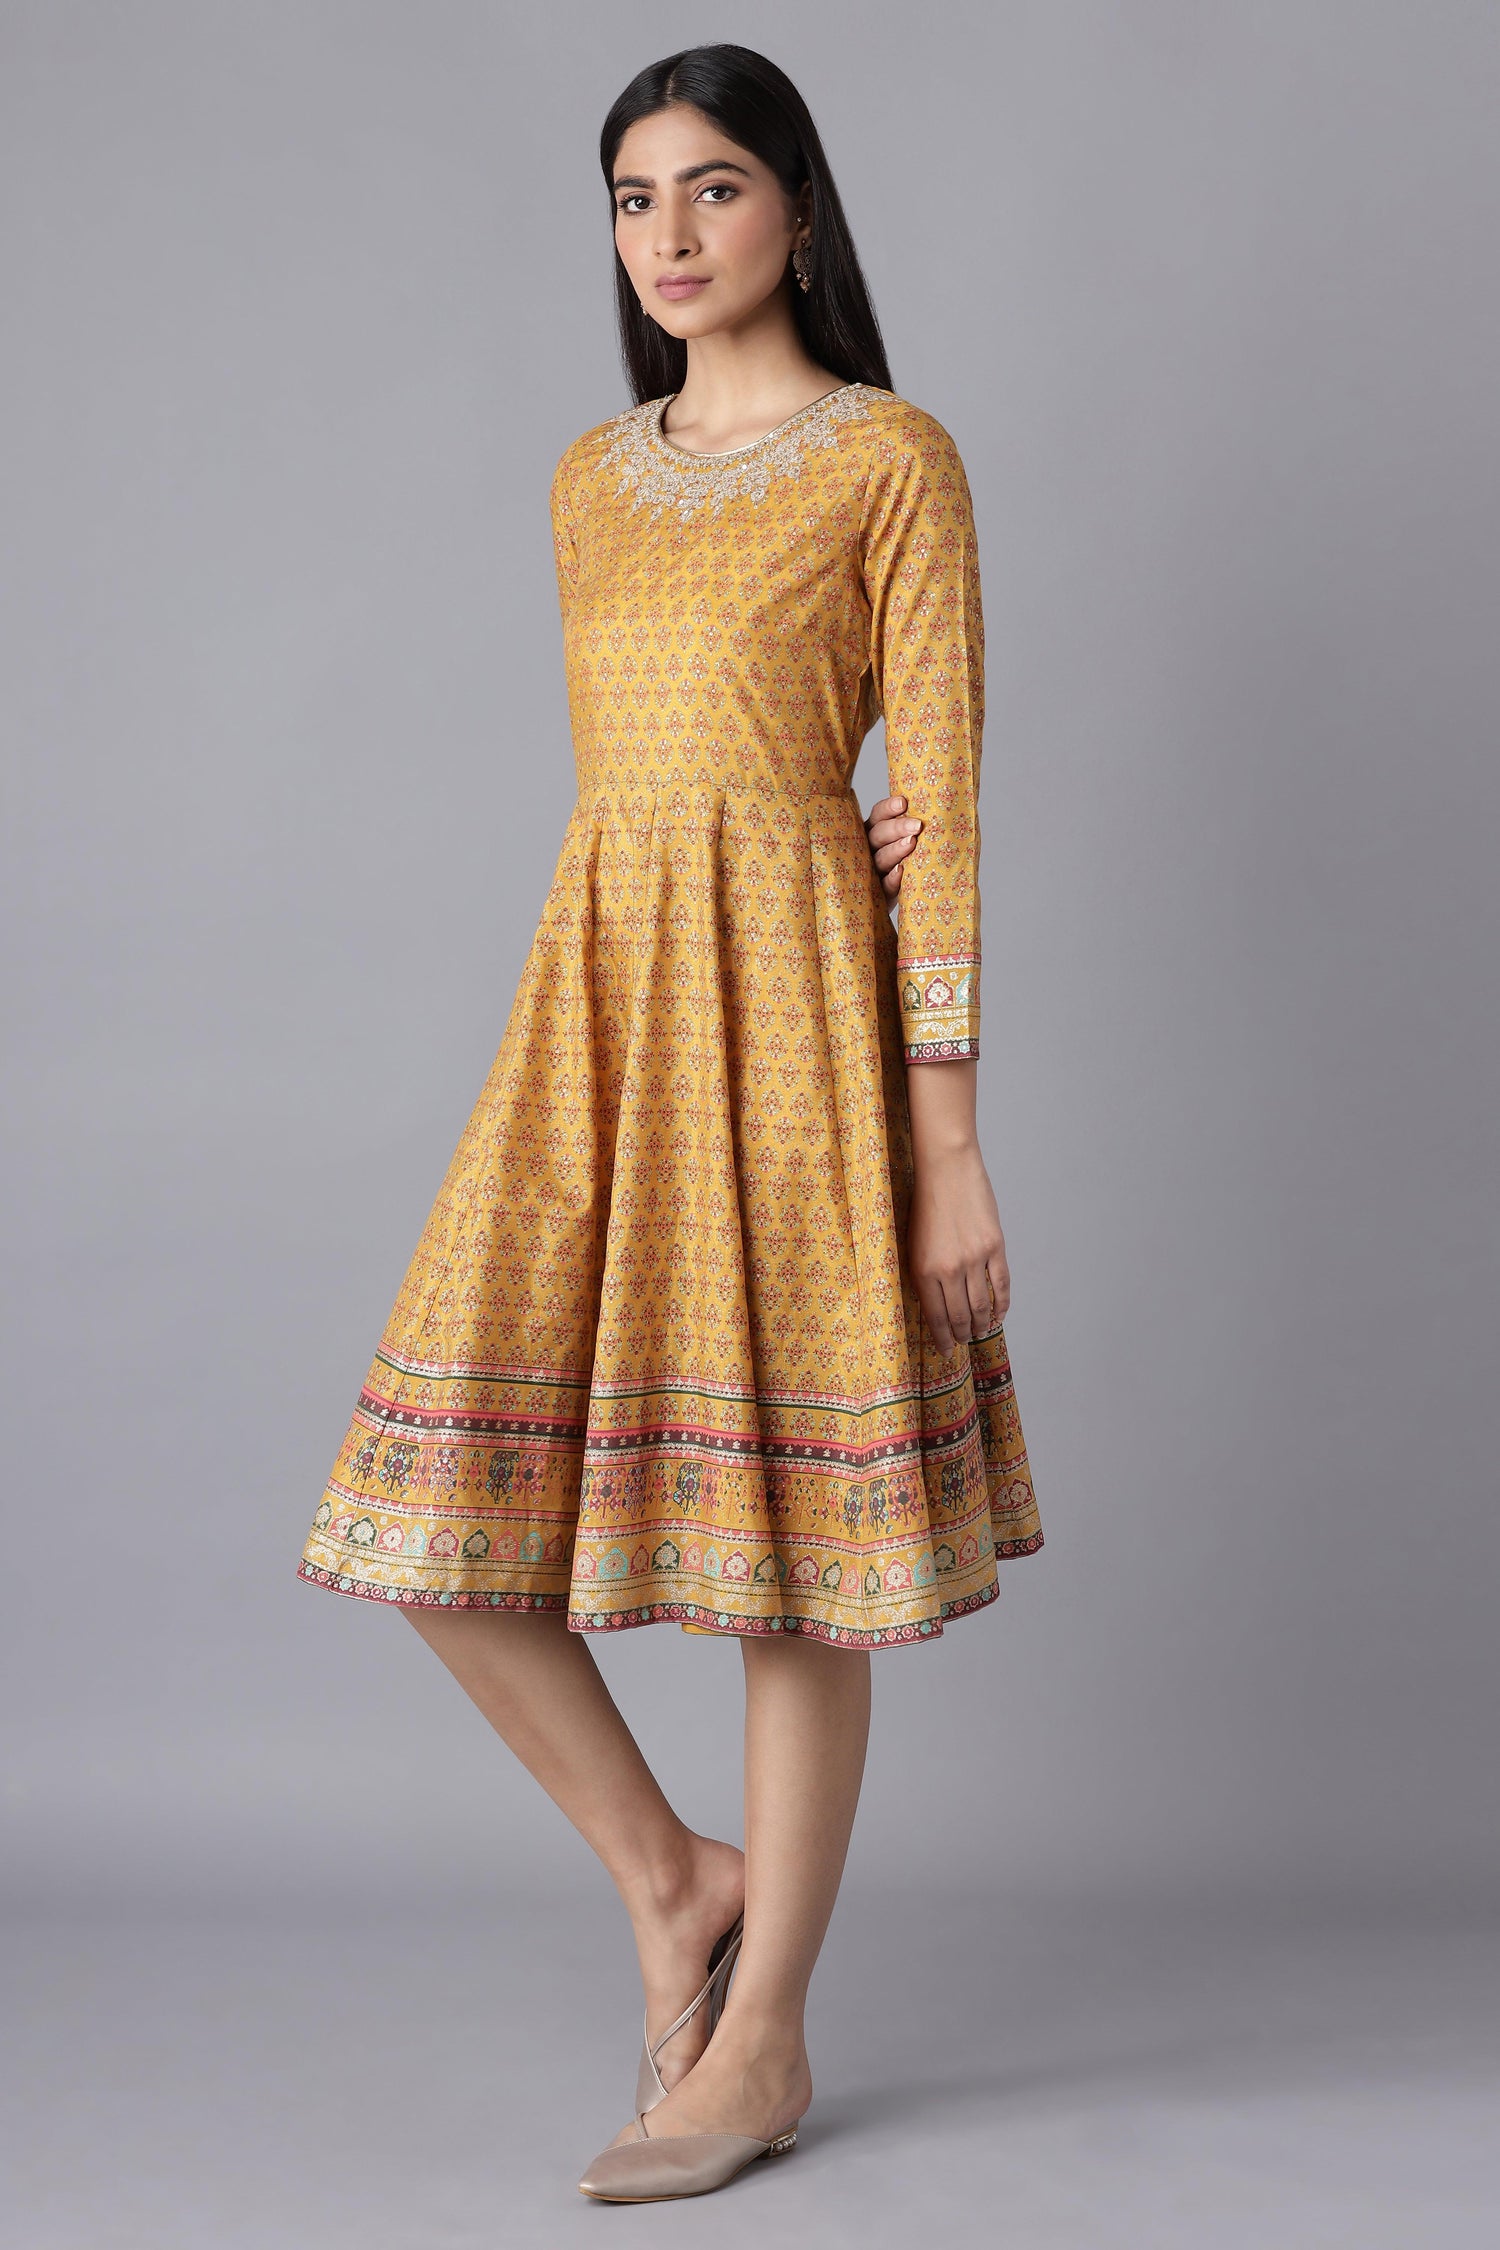 Chrome Yellow Printed kurta with Embroidery - wforwoman